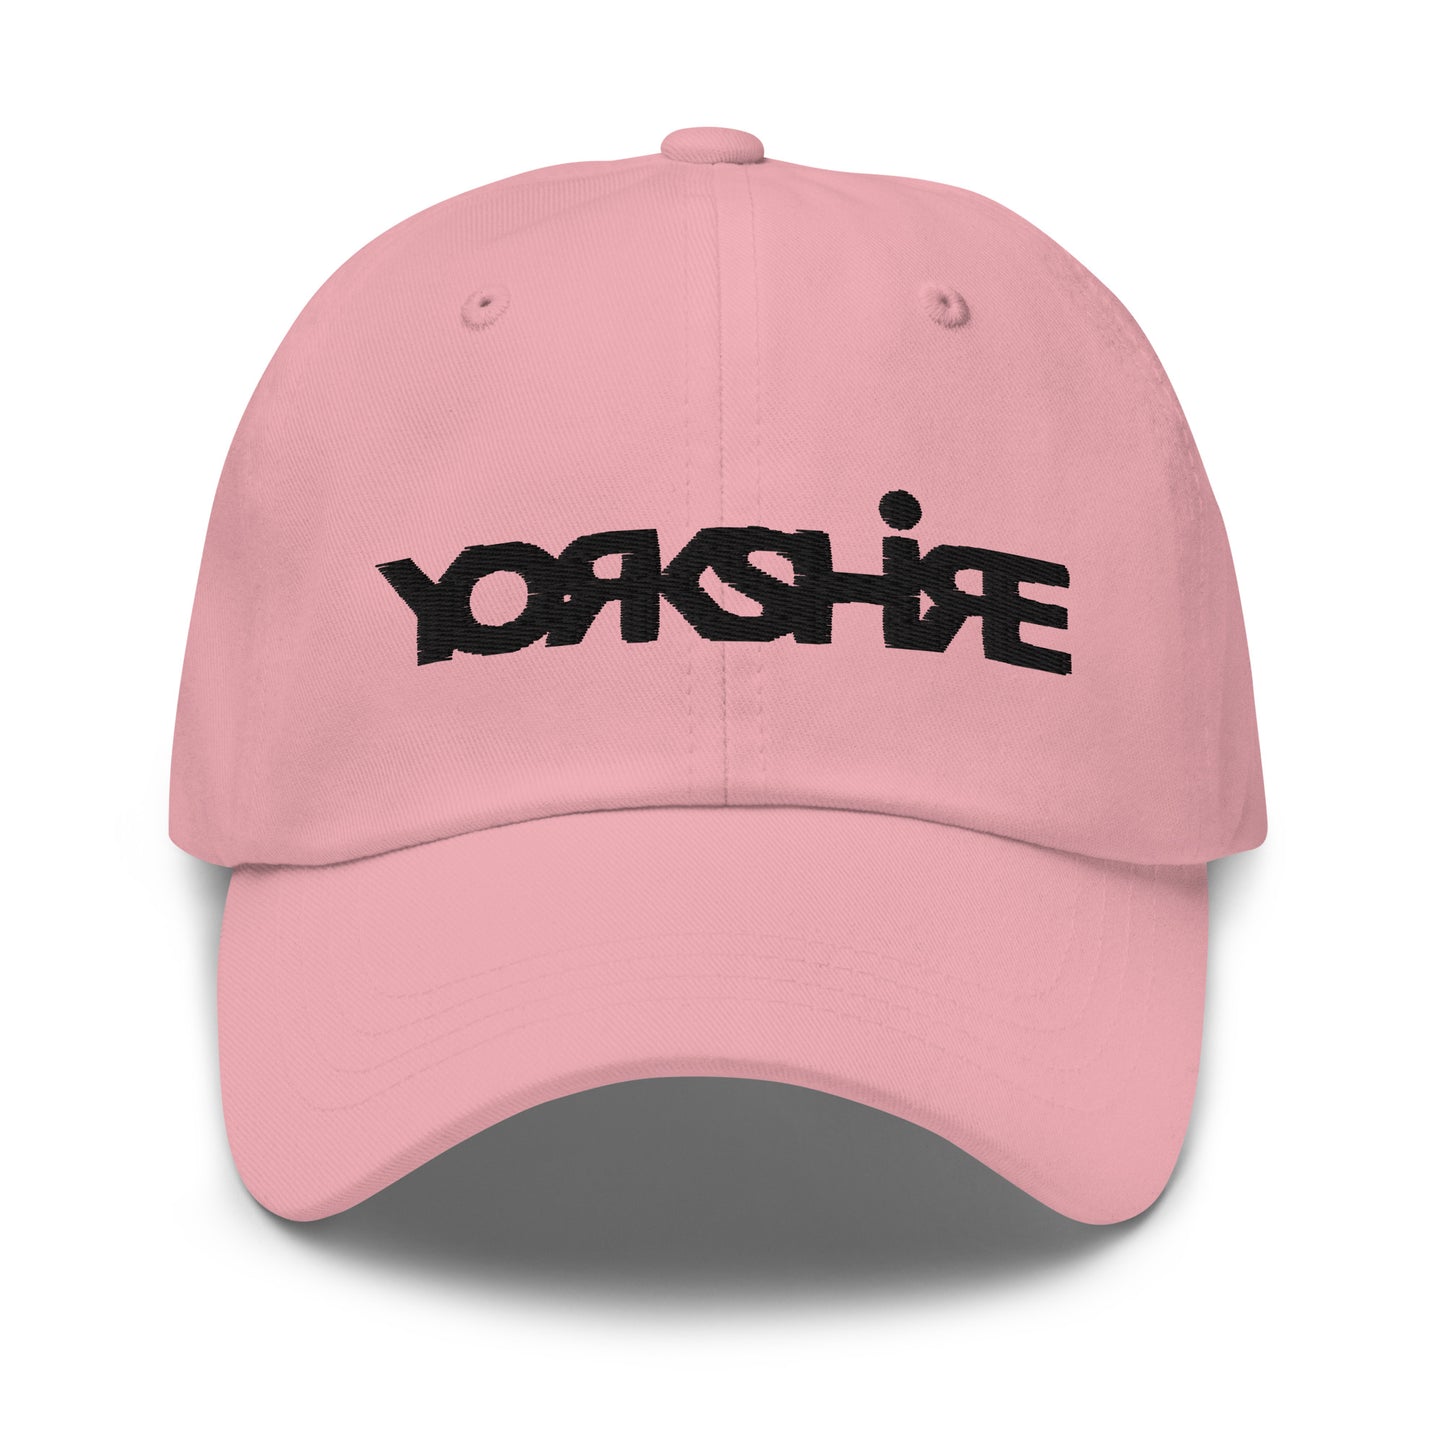 Yorkshire Cap